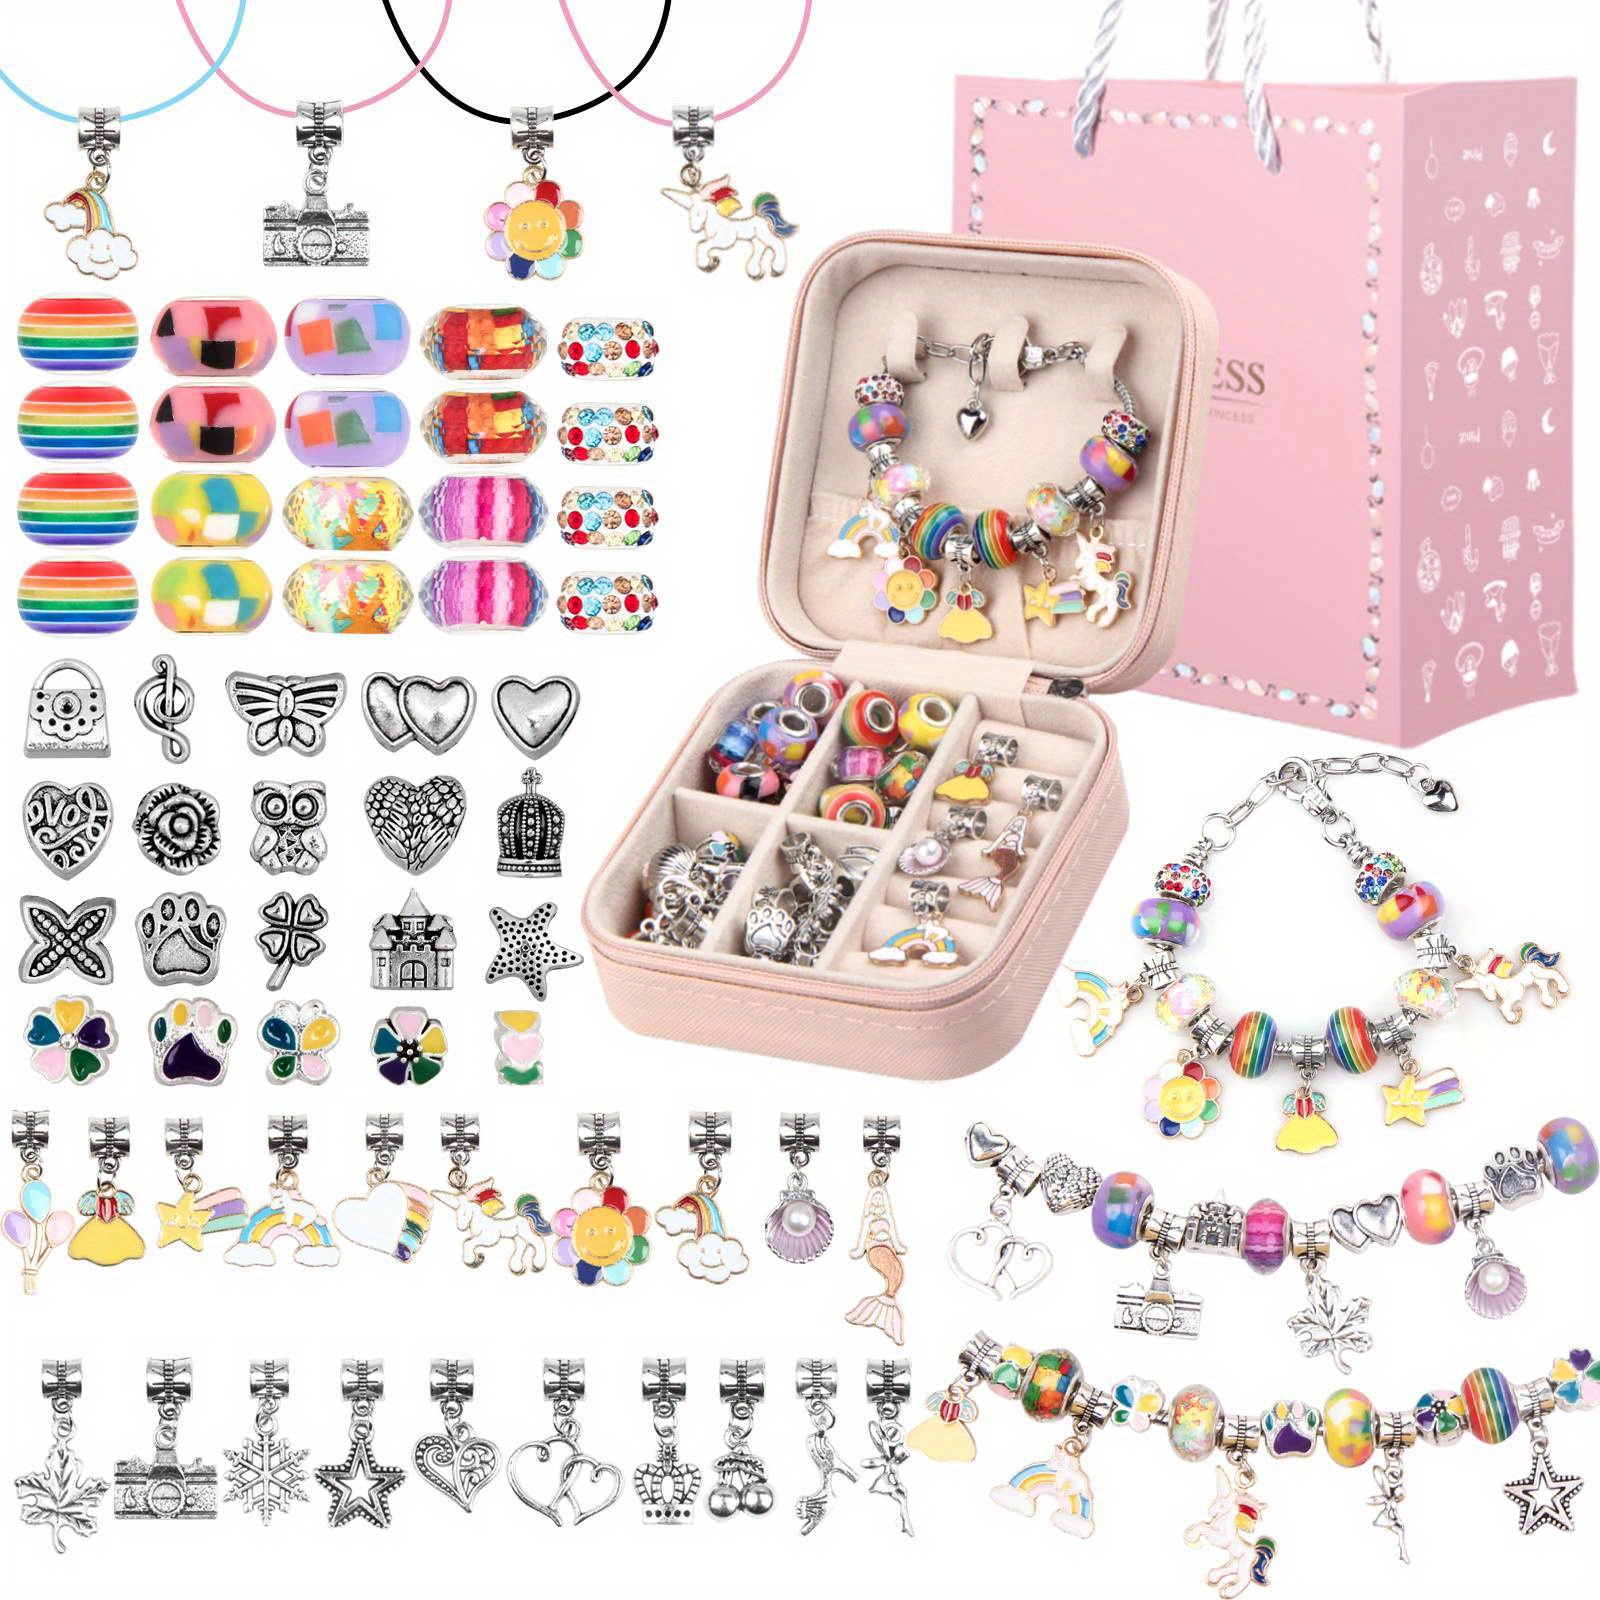 Charm Bracelet Making Kit for Girls, Unicorn/Mermaid Crafts Gifts